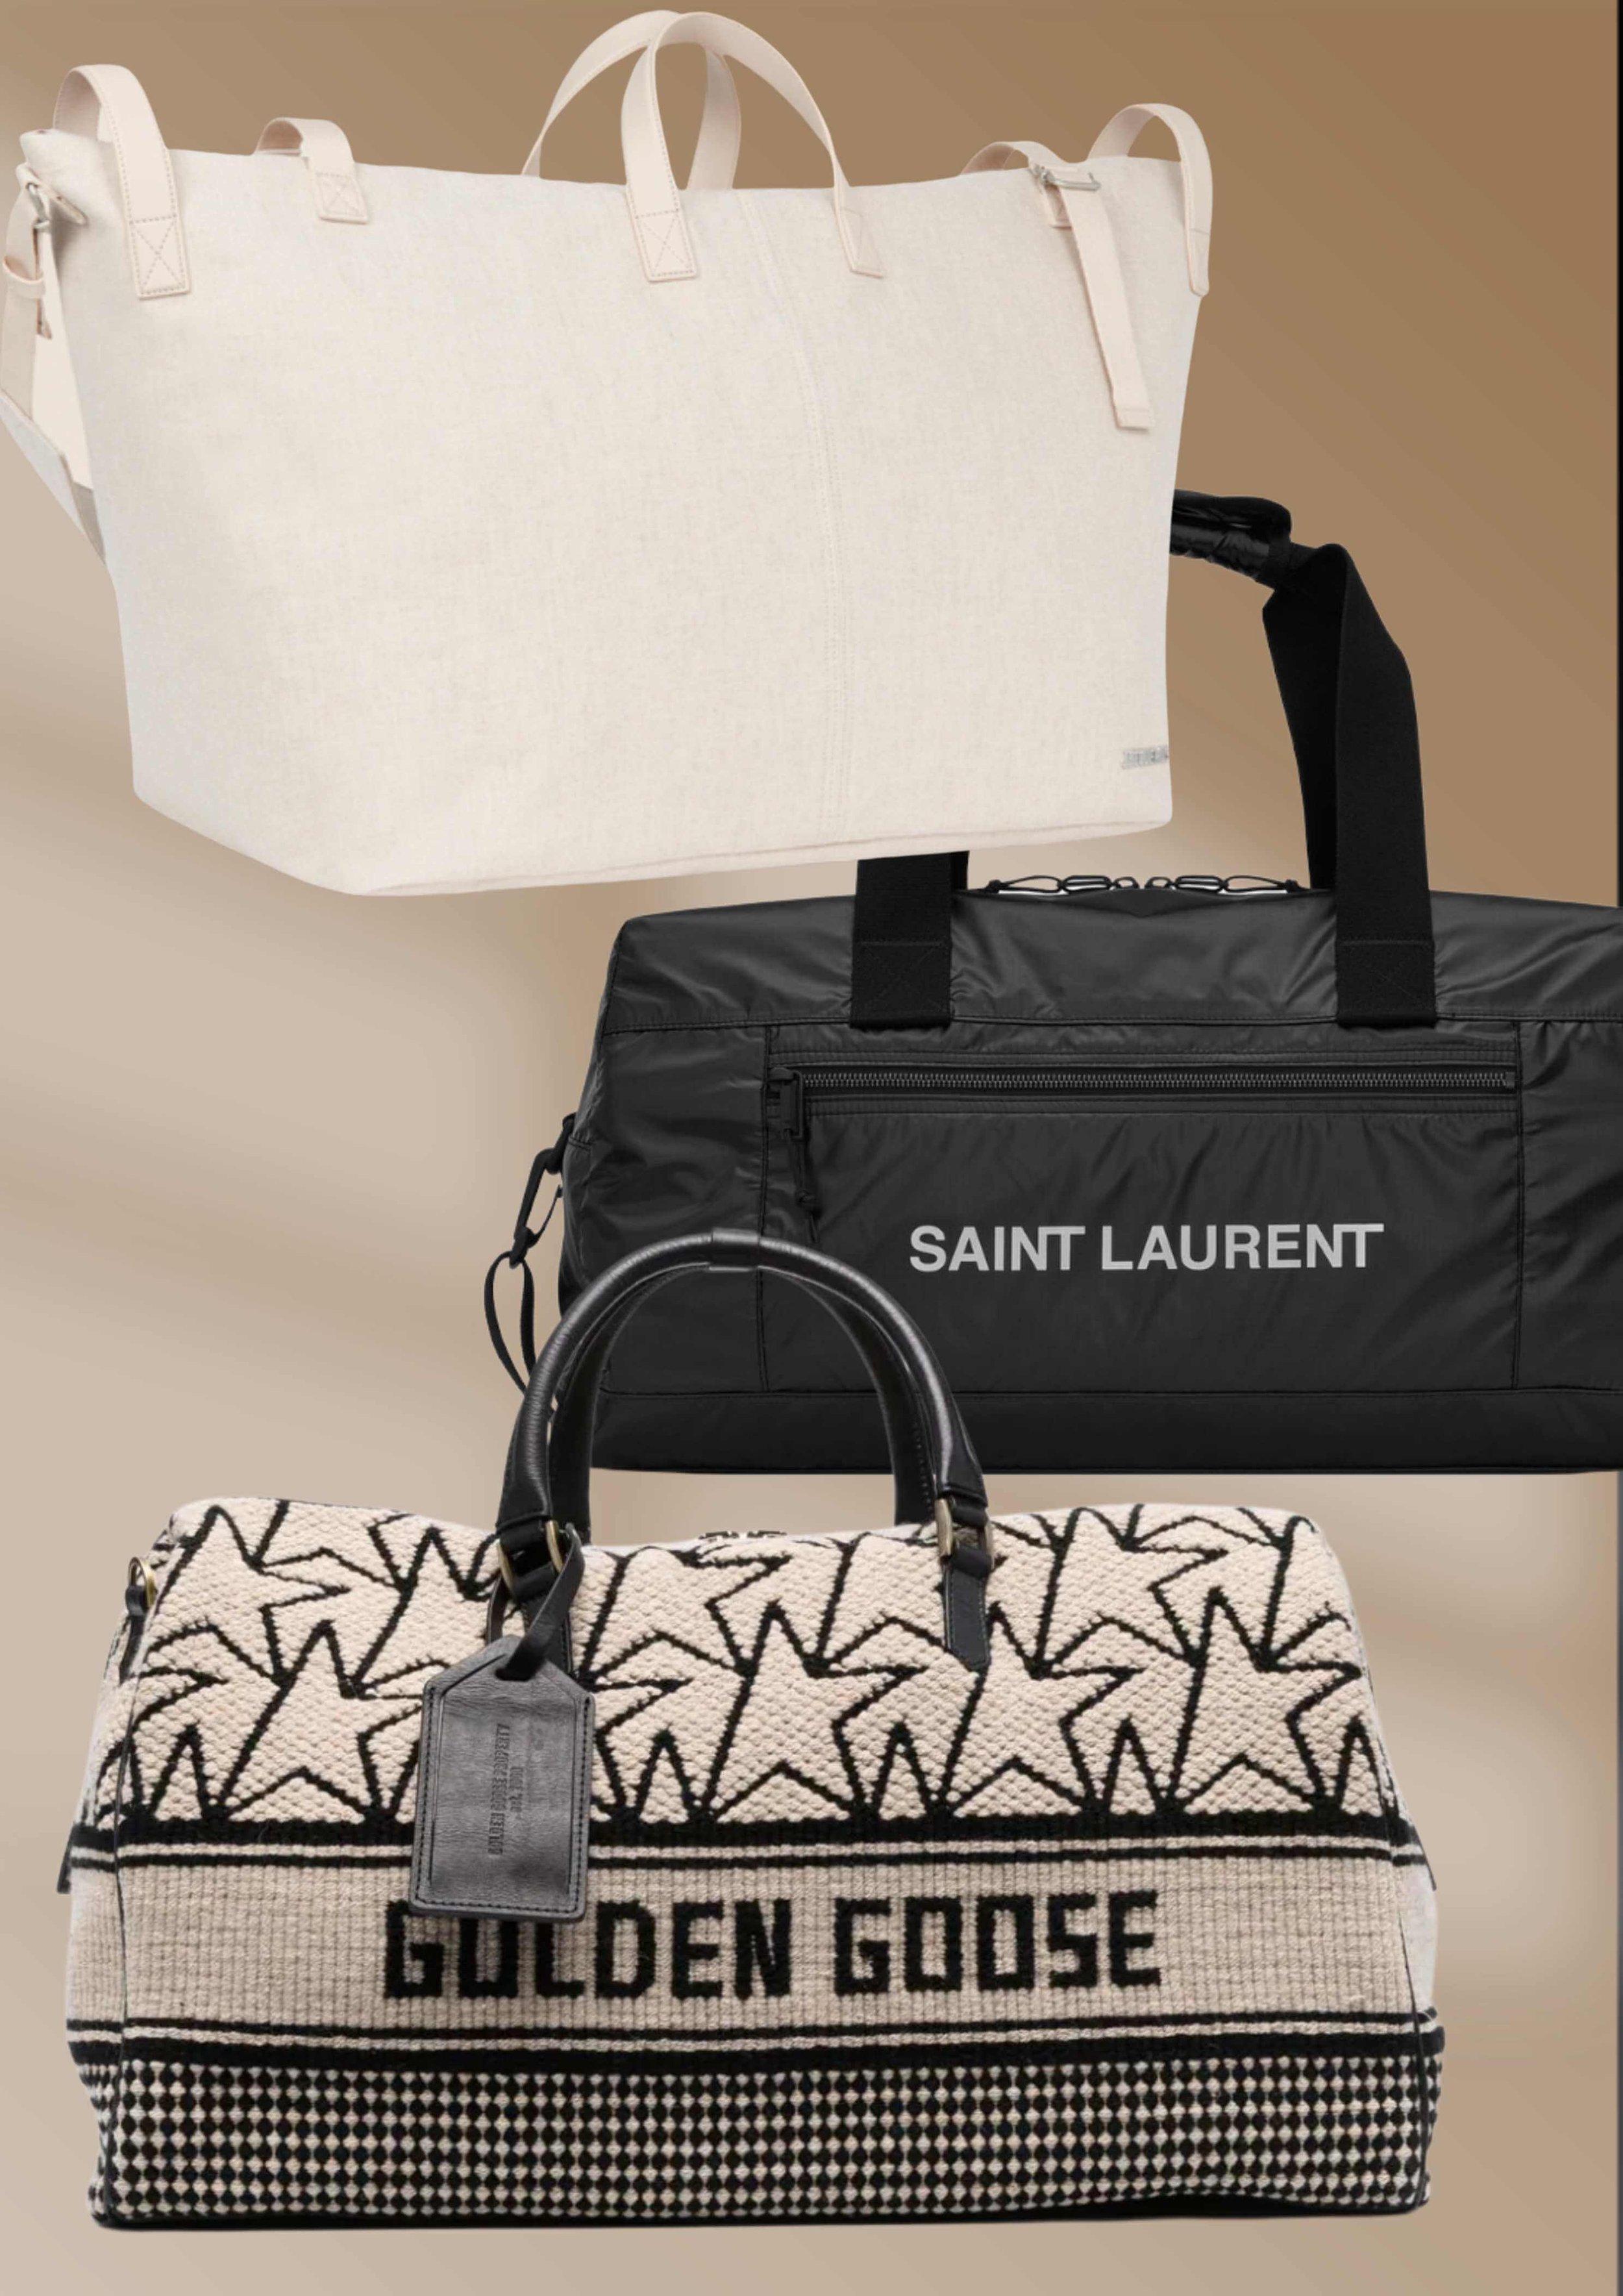 Luxury Fashion Men Women High-quality Travel Duffle Bags Brand Designer  Luggage Handbags with Lock